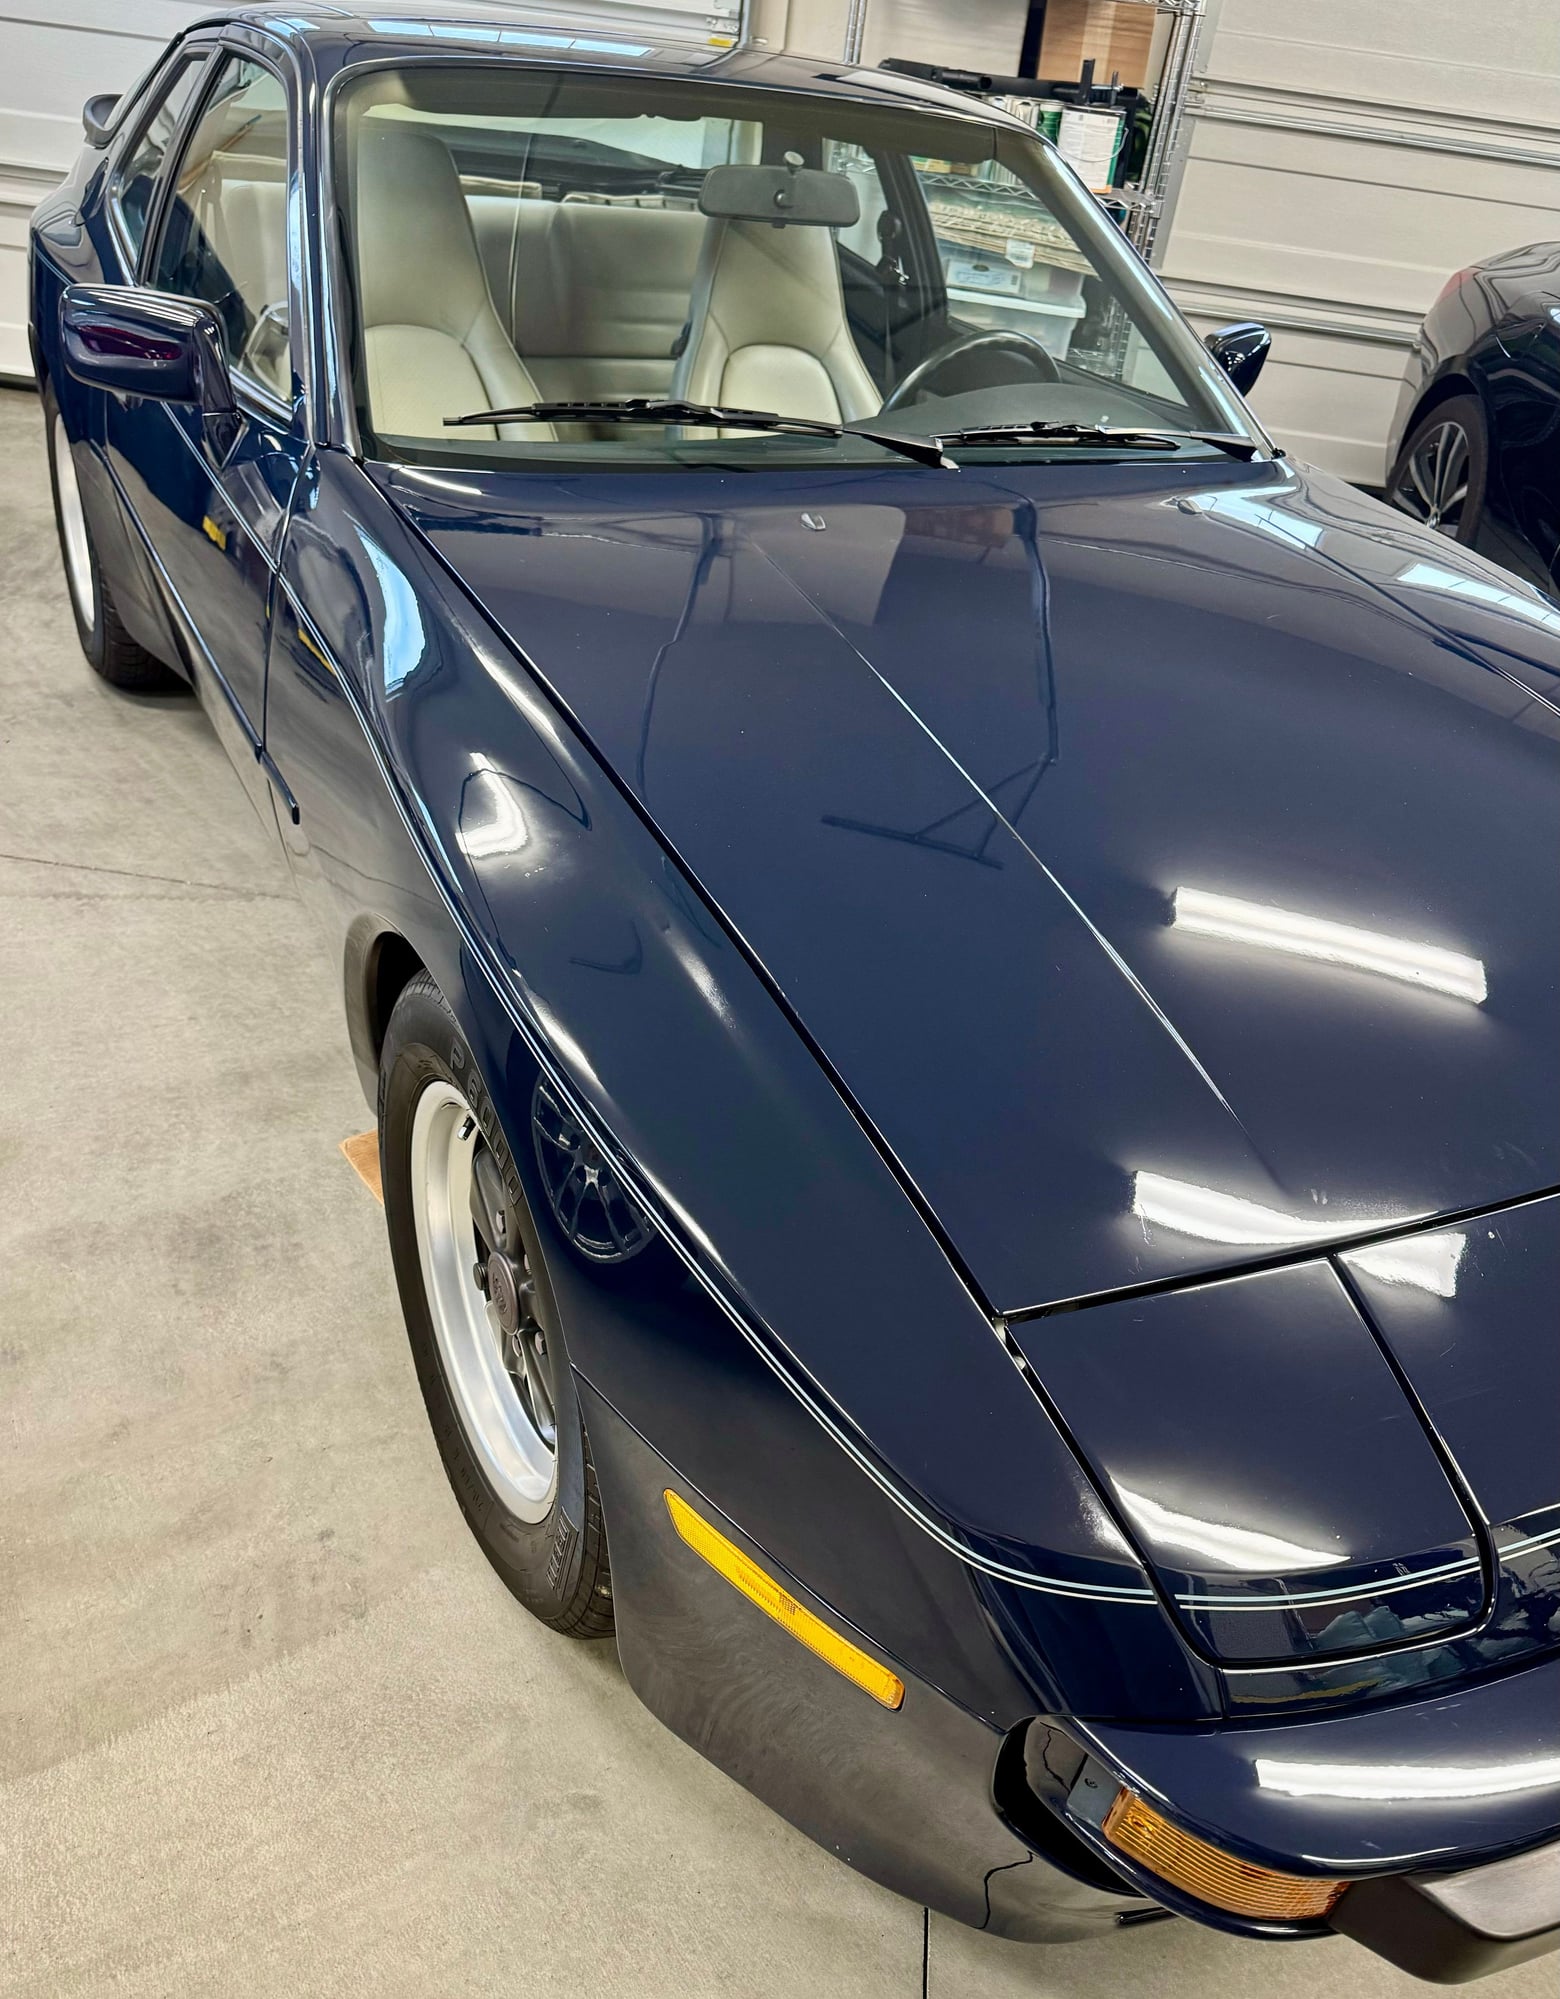 1985 Porsche 944 - 1985.5 Porsche 944 - 18K Mile, Single Family Time Capsule - Copenhagen Blue/Cream - Used - Prescott Valley, AZ 86314, United States